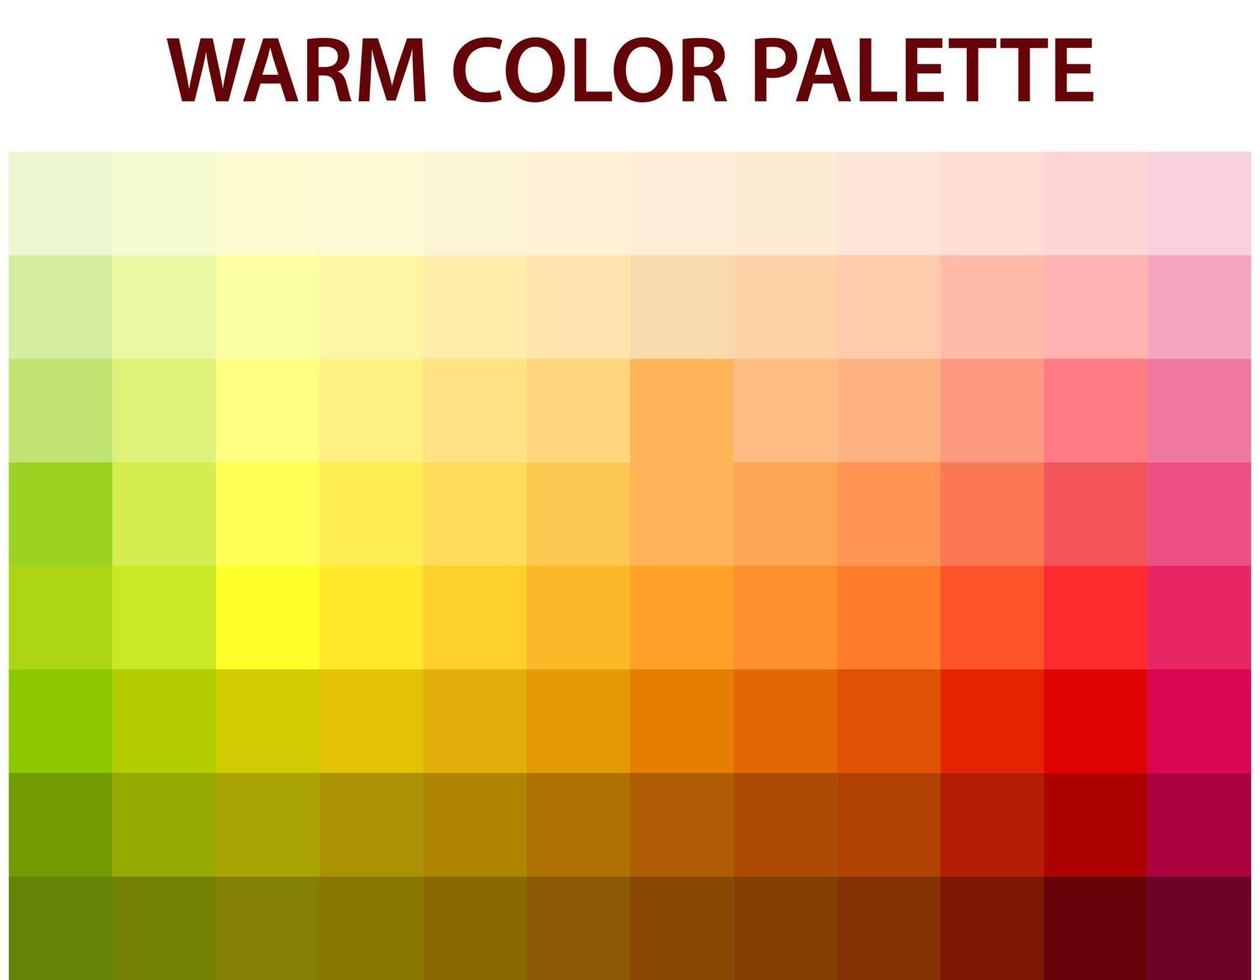 Vektorgrafik der warmen Farbpalette. abstrakte farbige Palettenanleitung. vektor